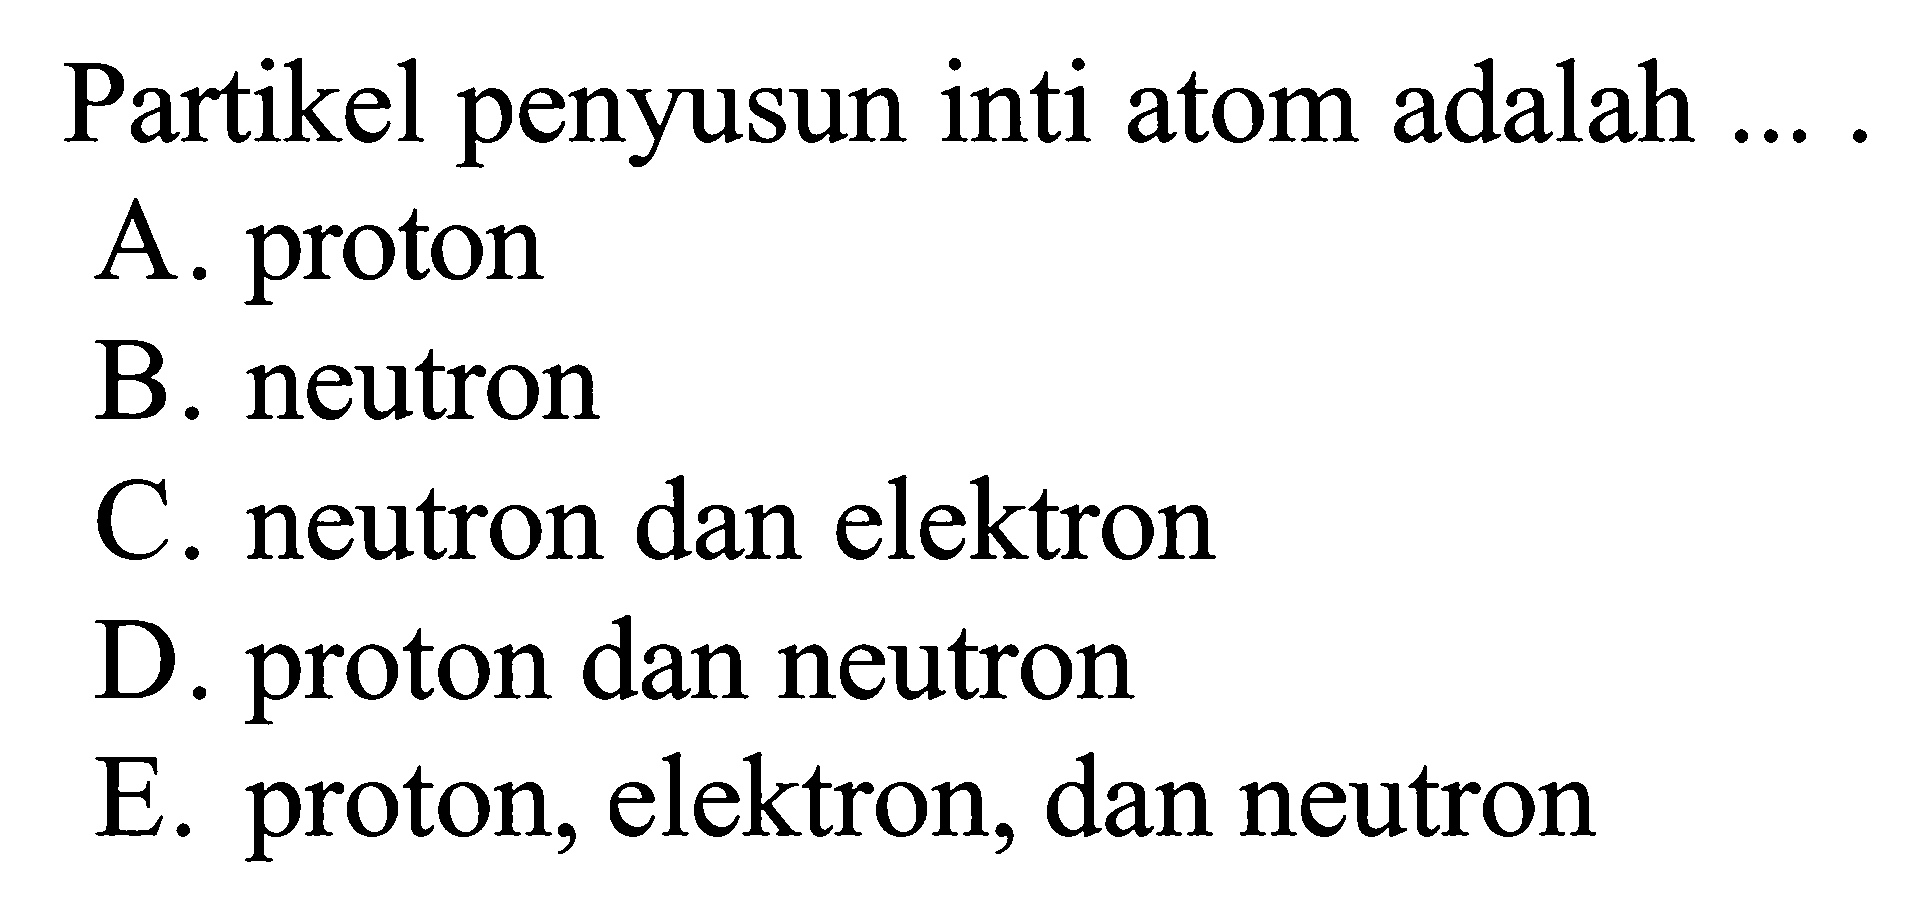 Partikel penyusun inti atom adalah ..